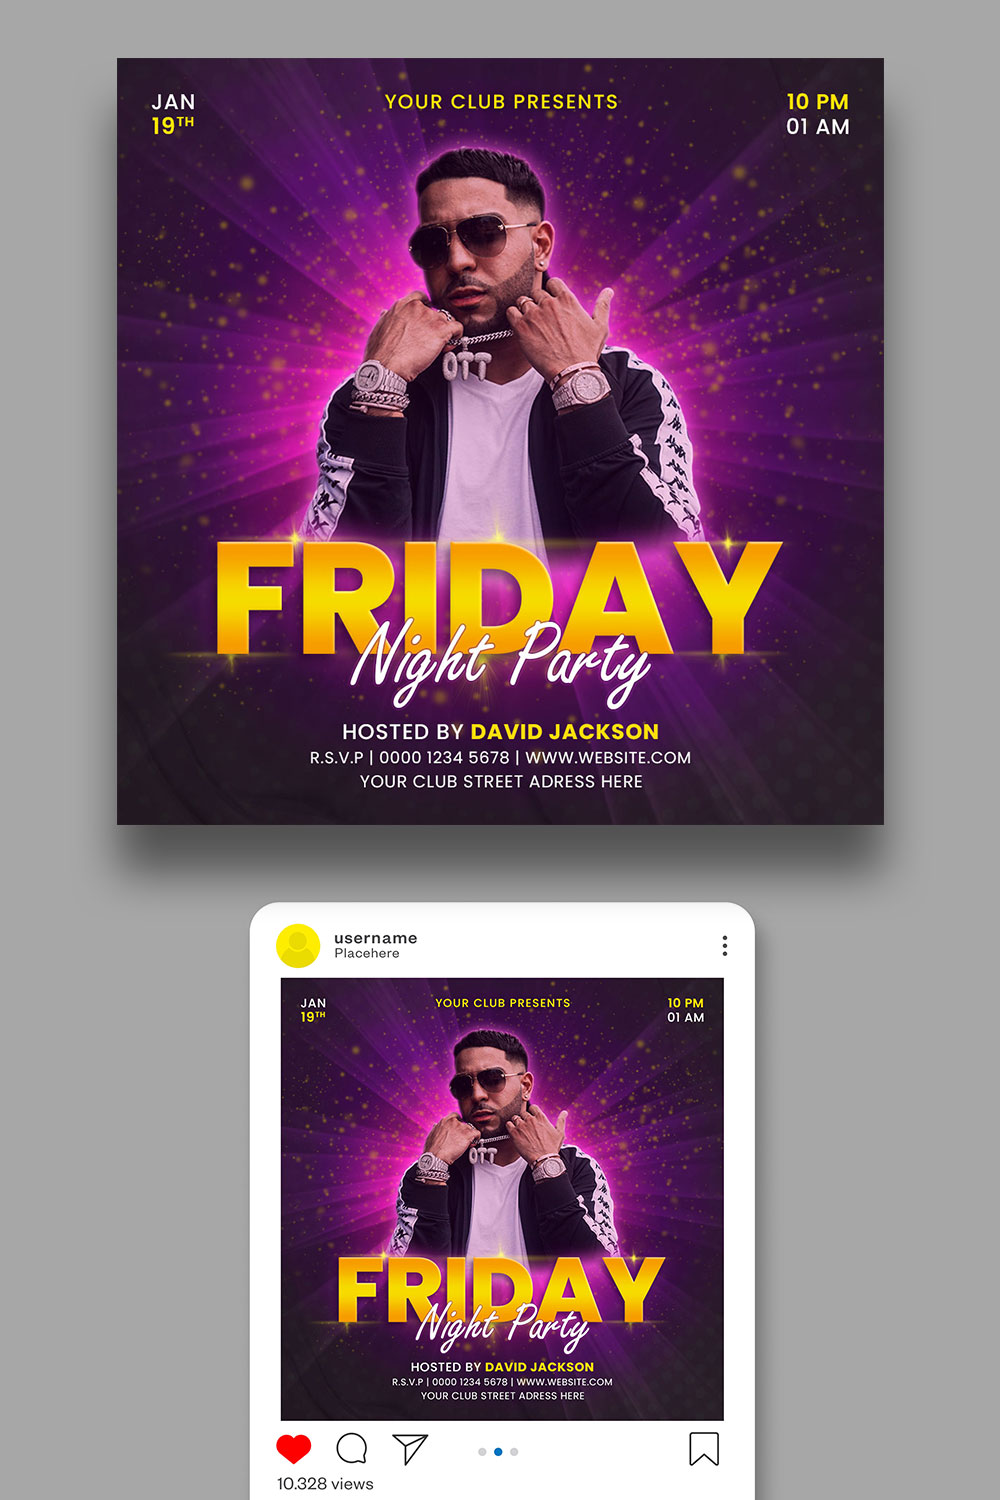 Friday music fest dj party flyer social media post design template pinterest preview image.